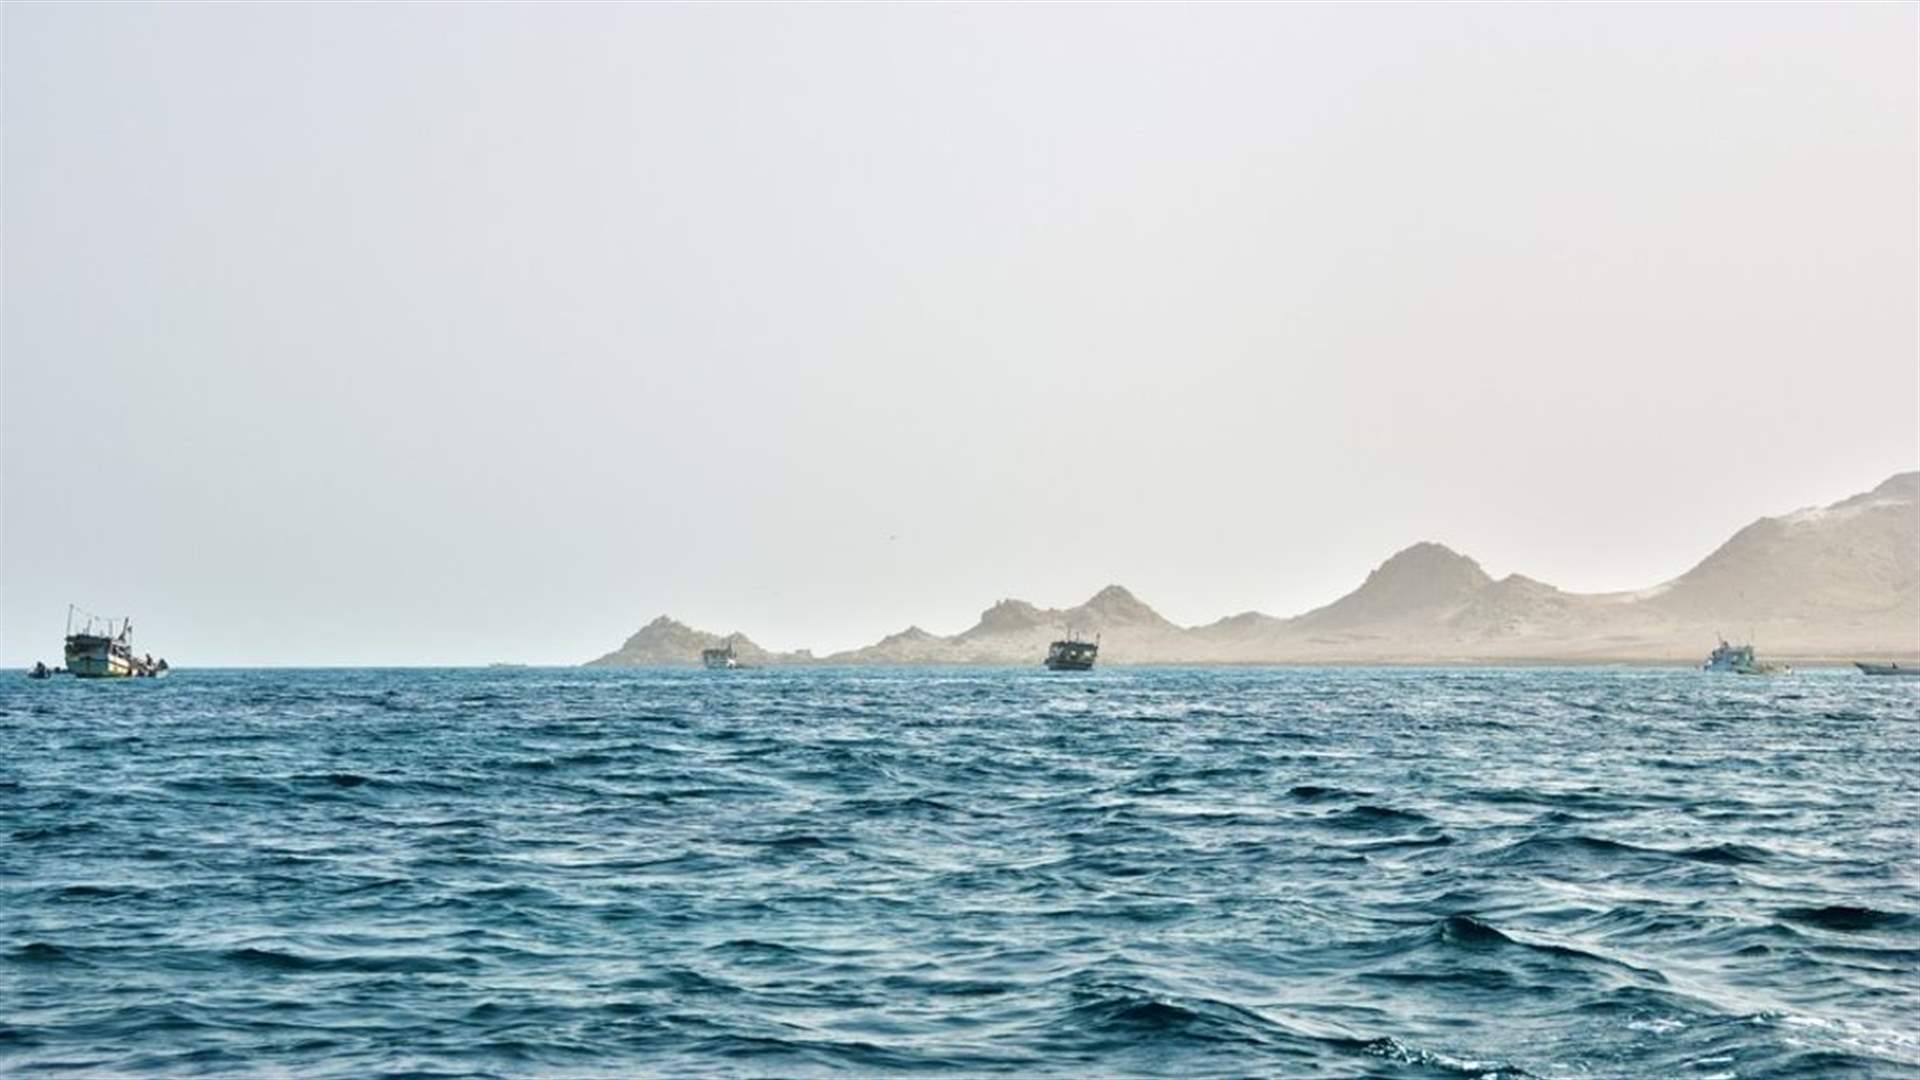 British maritime authority receives report of incident 83 nautical miles from Aden, Yemen